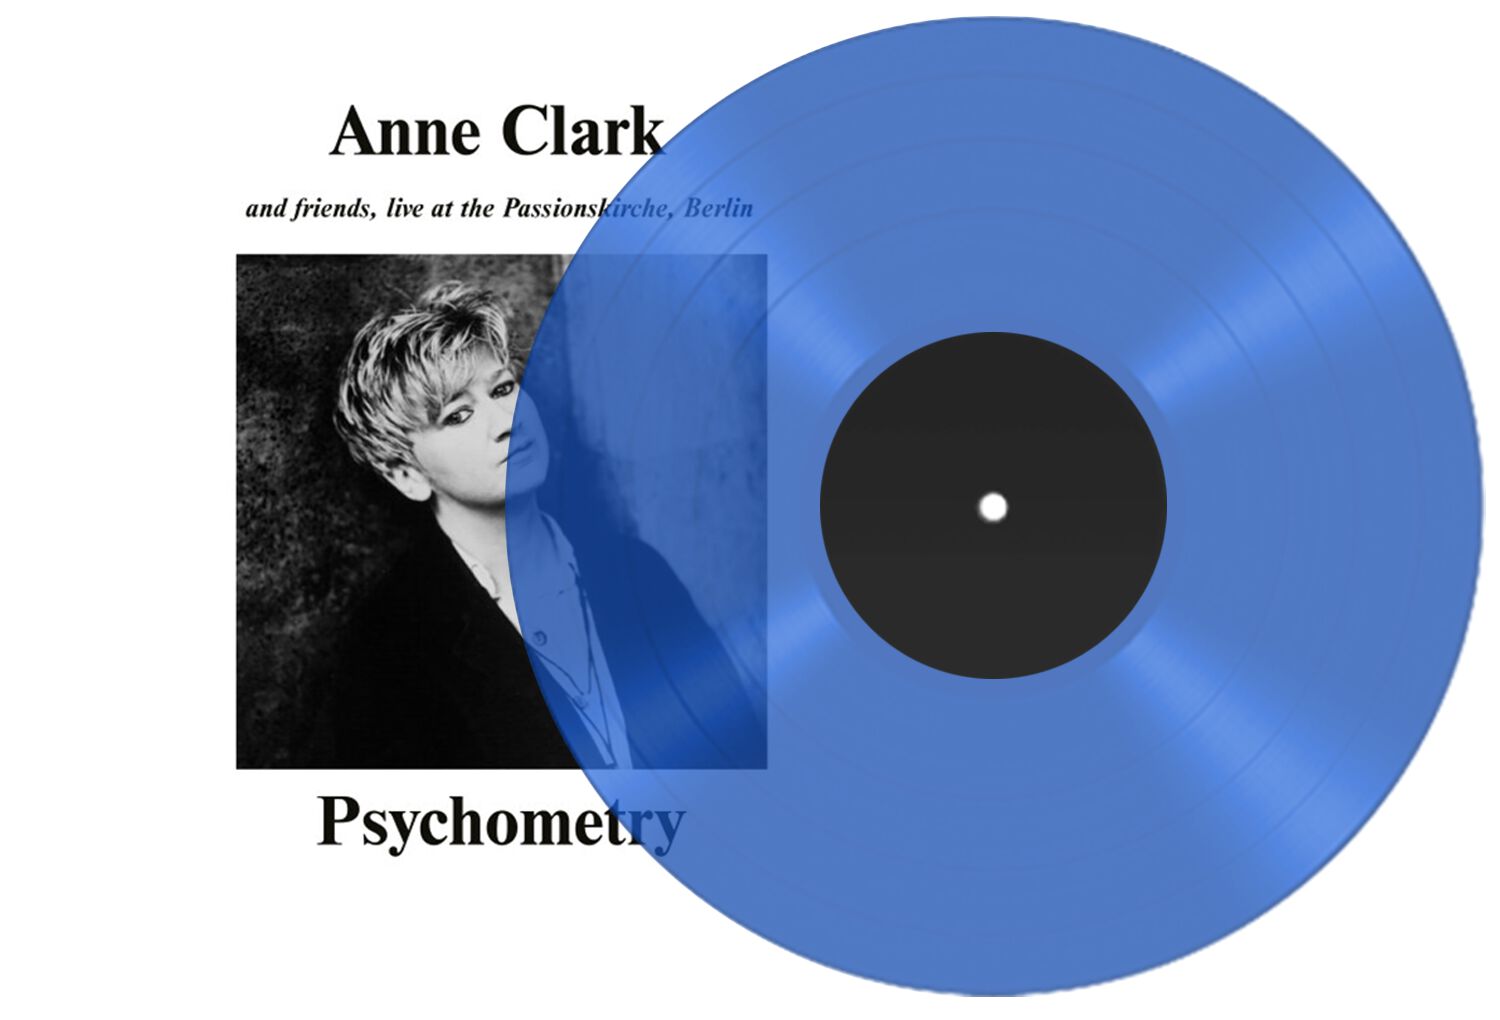 Anne Clark Psychometry LP blue